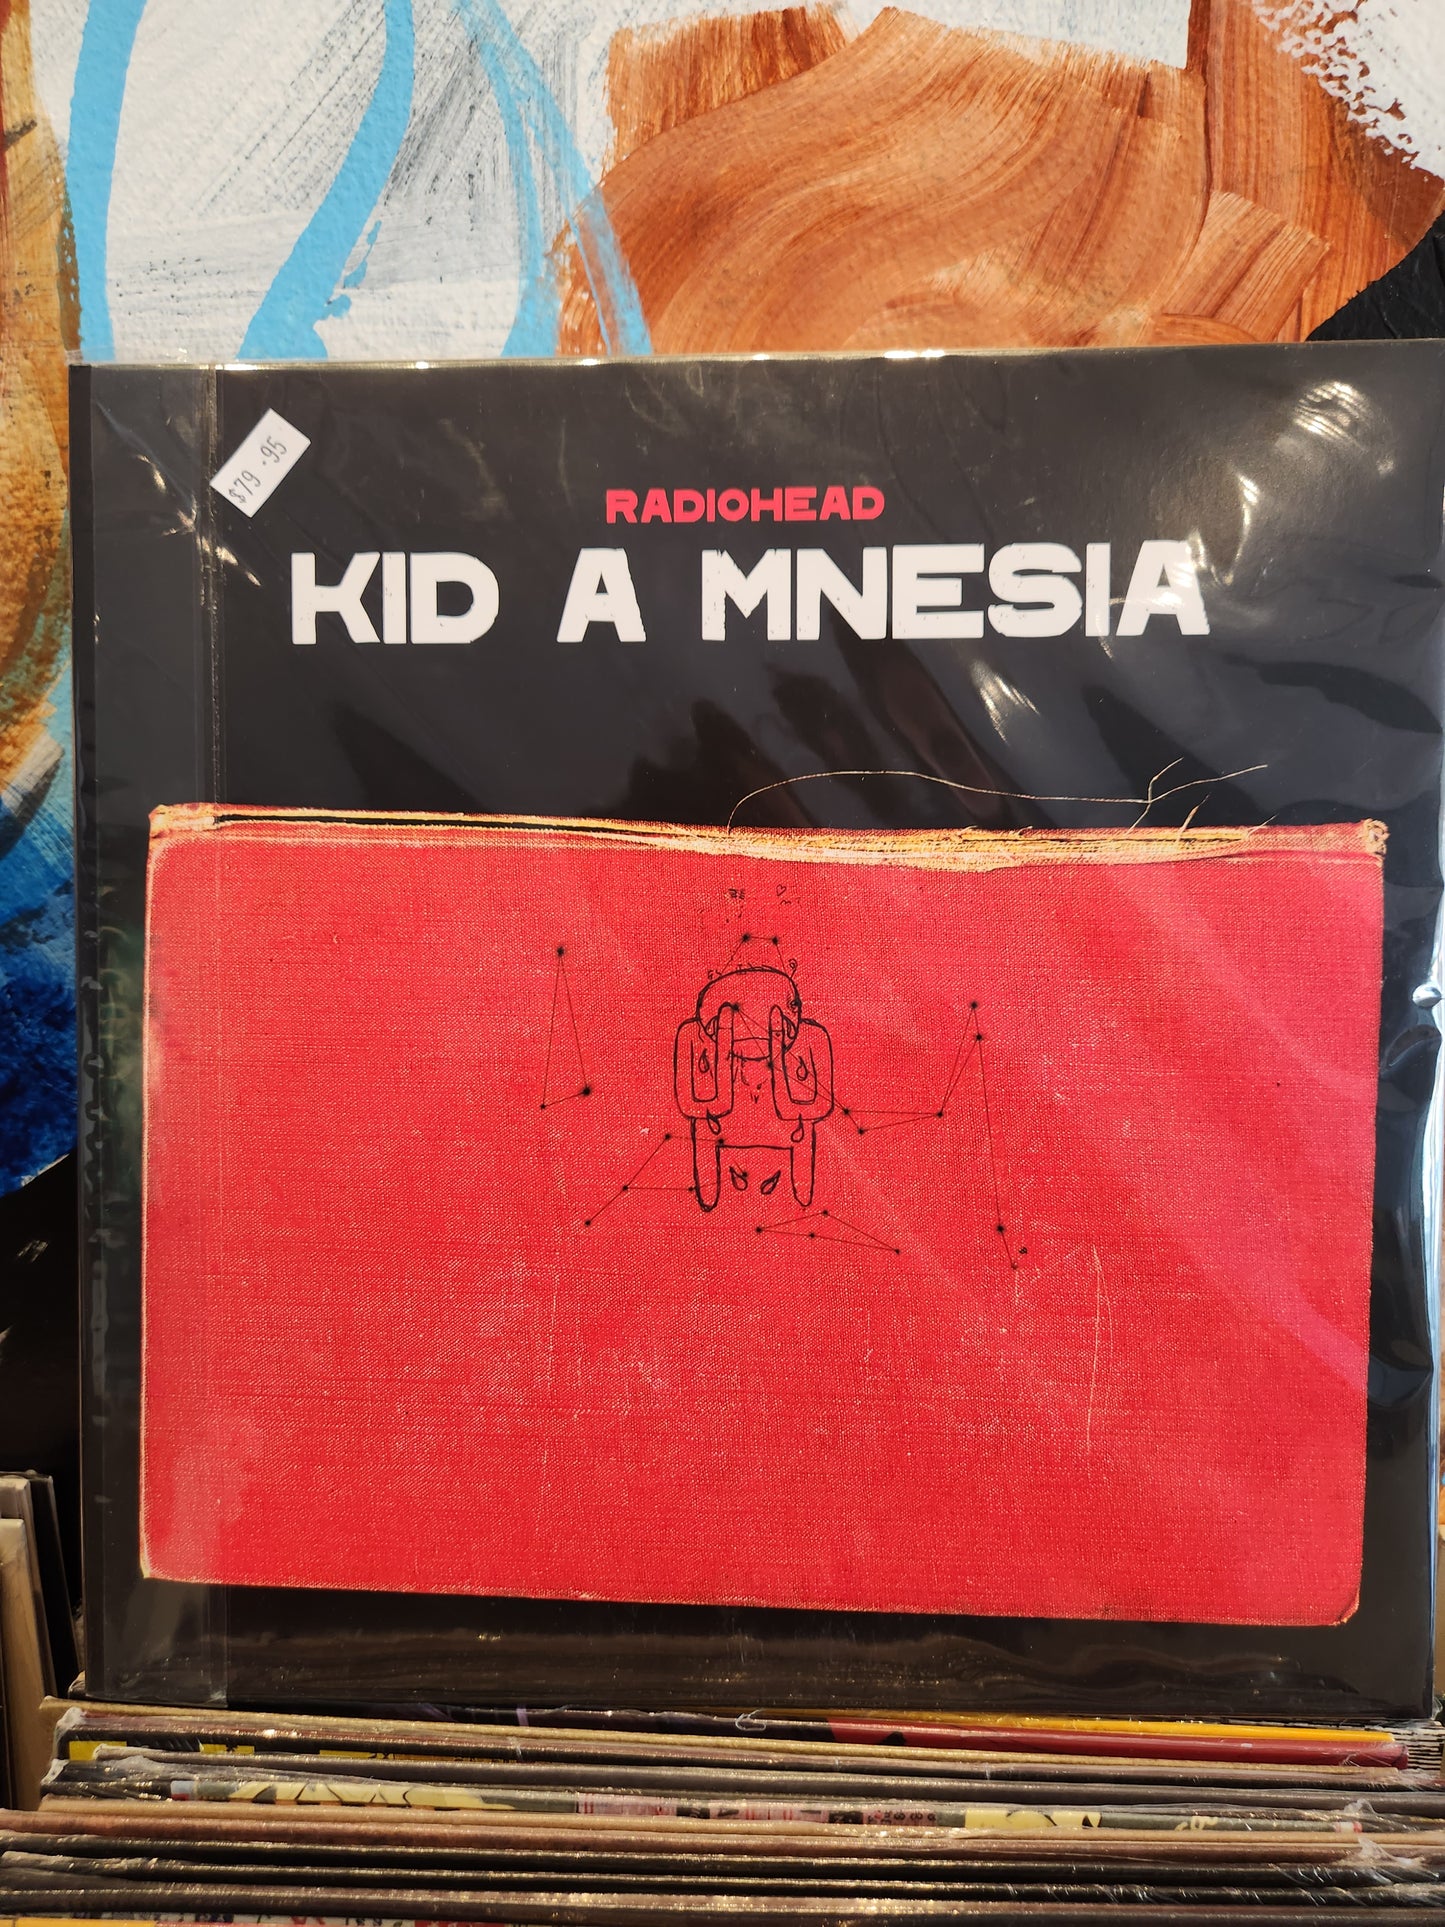 Radiohead - Kid A Mnesia - Vinyl LP